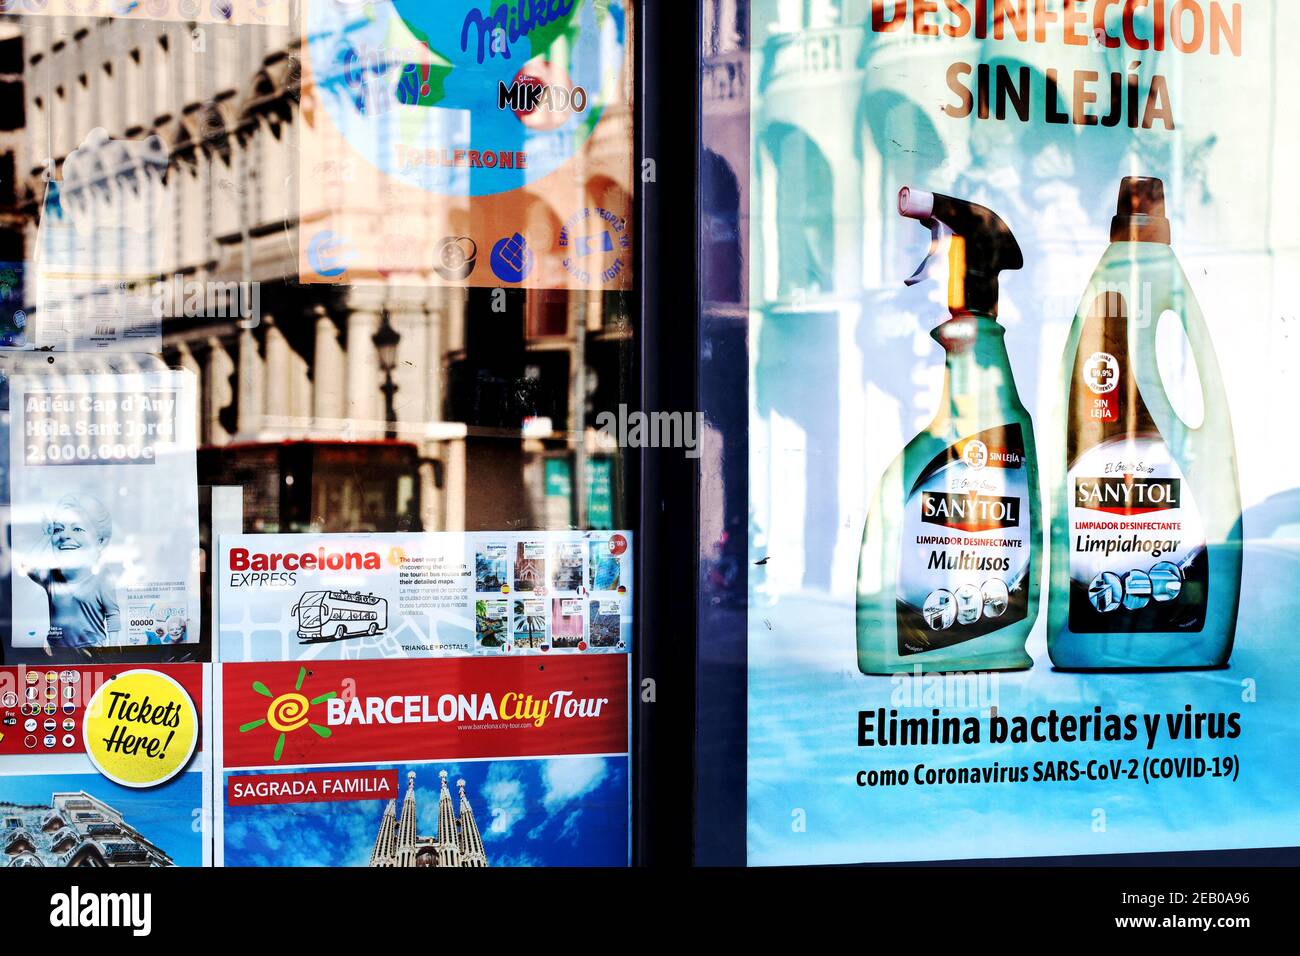 Ad for Sanytol, Barcelona, Spain, Stock Photo